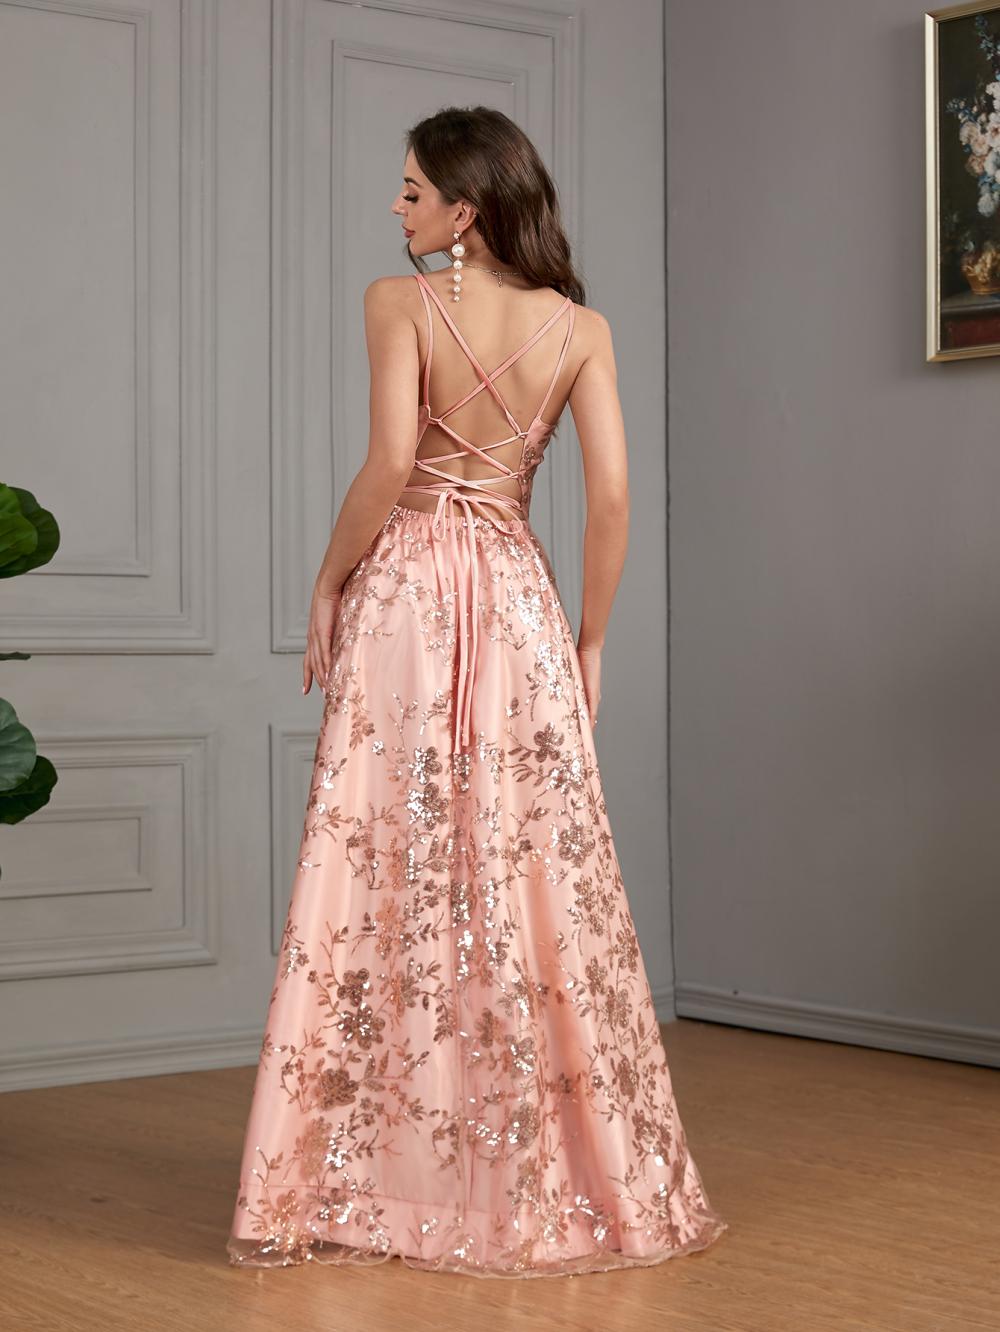 Aovica Elegant Leg Slit Glitter Dresses High Waist Satin Blush Pink Bandage Long Dress Backless Special Birthday Formal Party Prom Gown